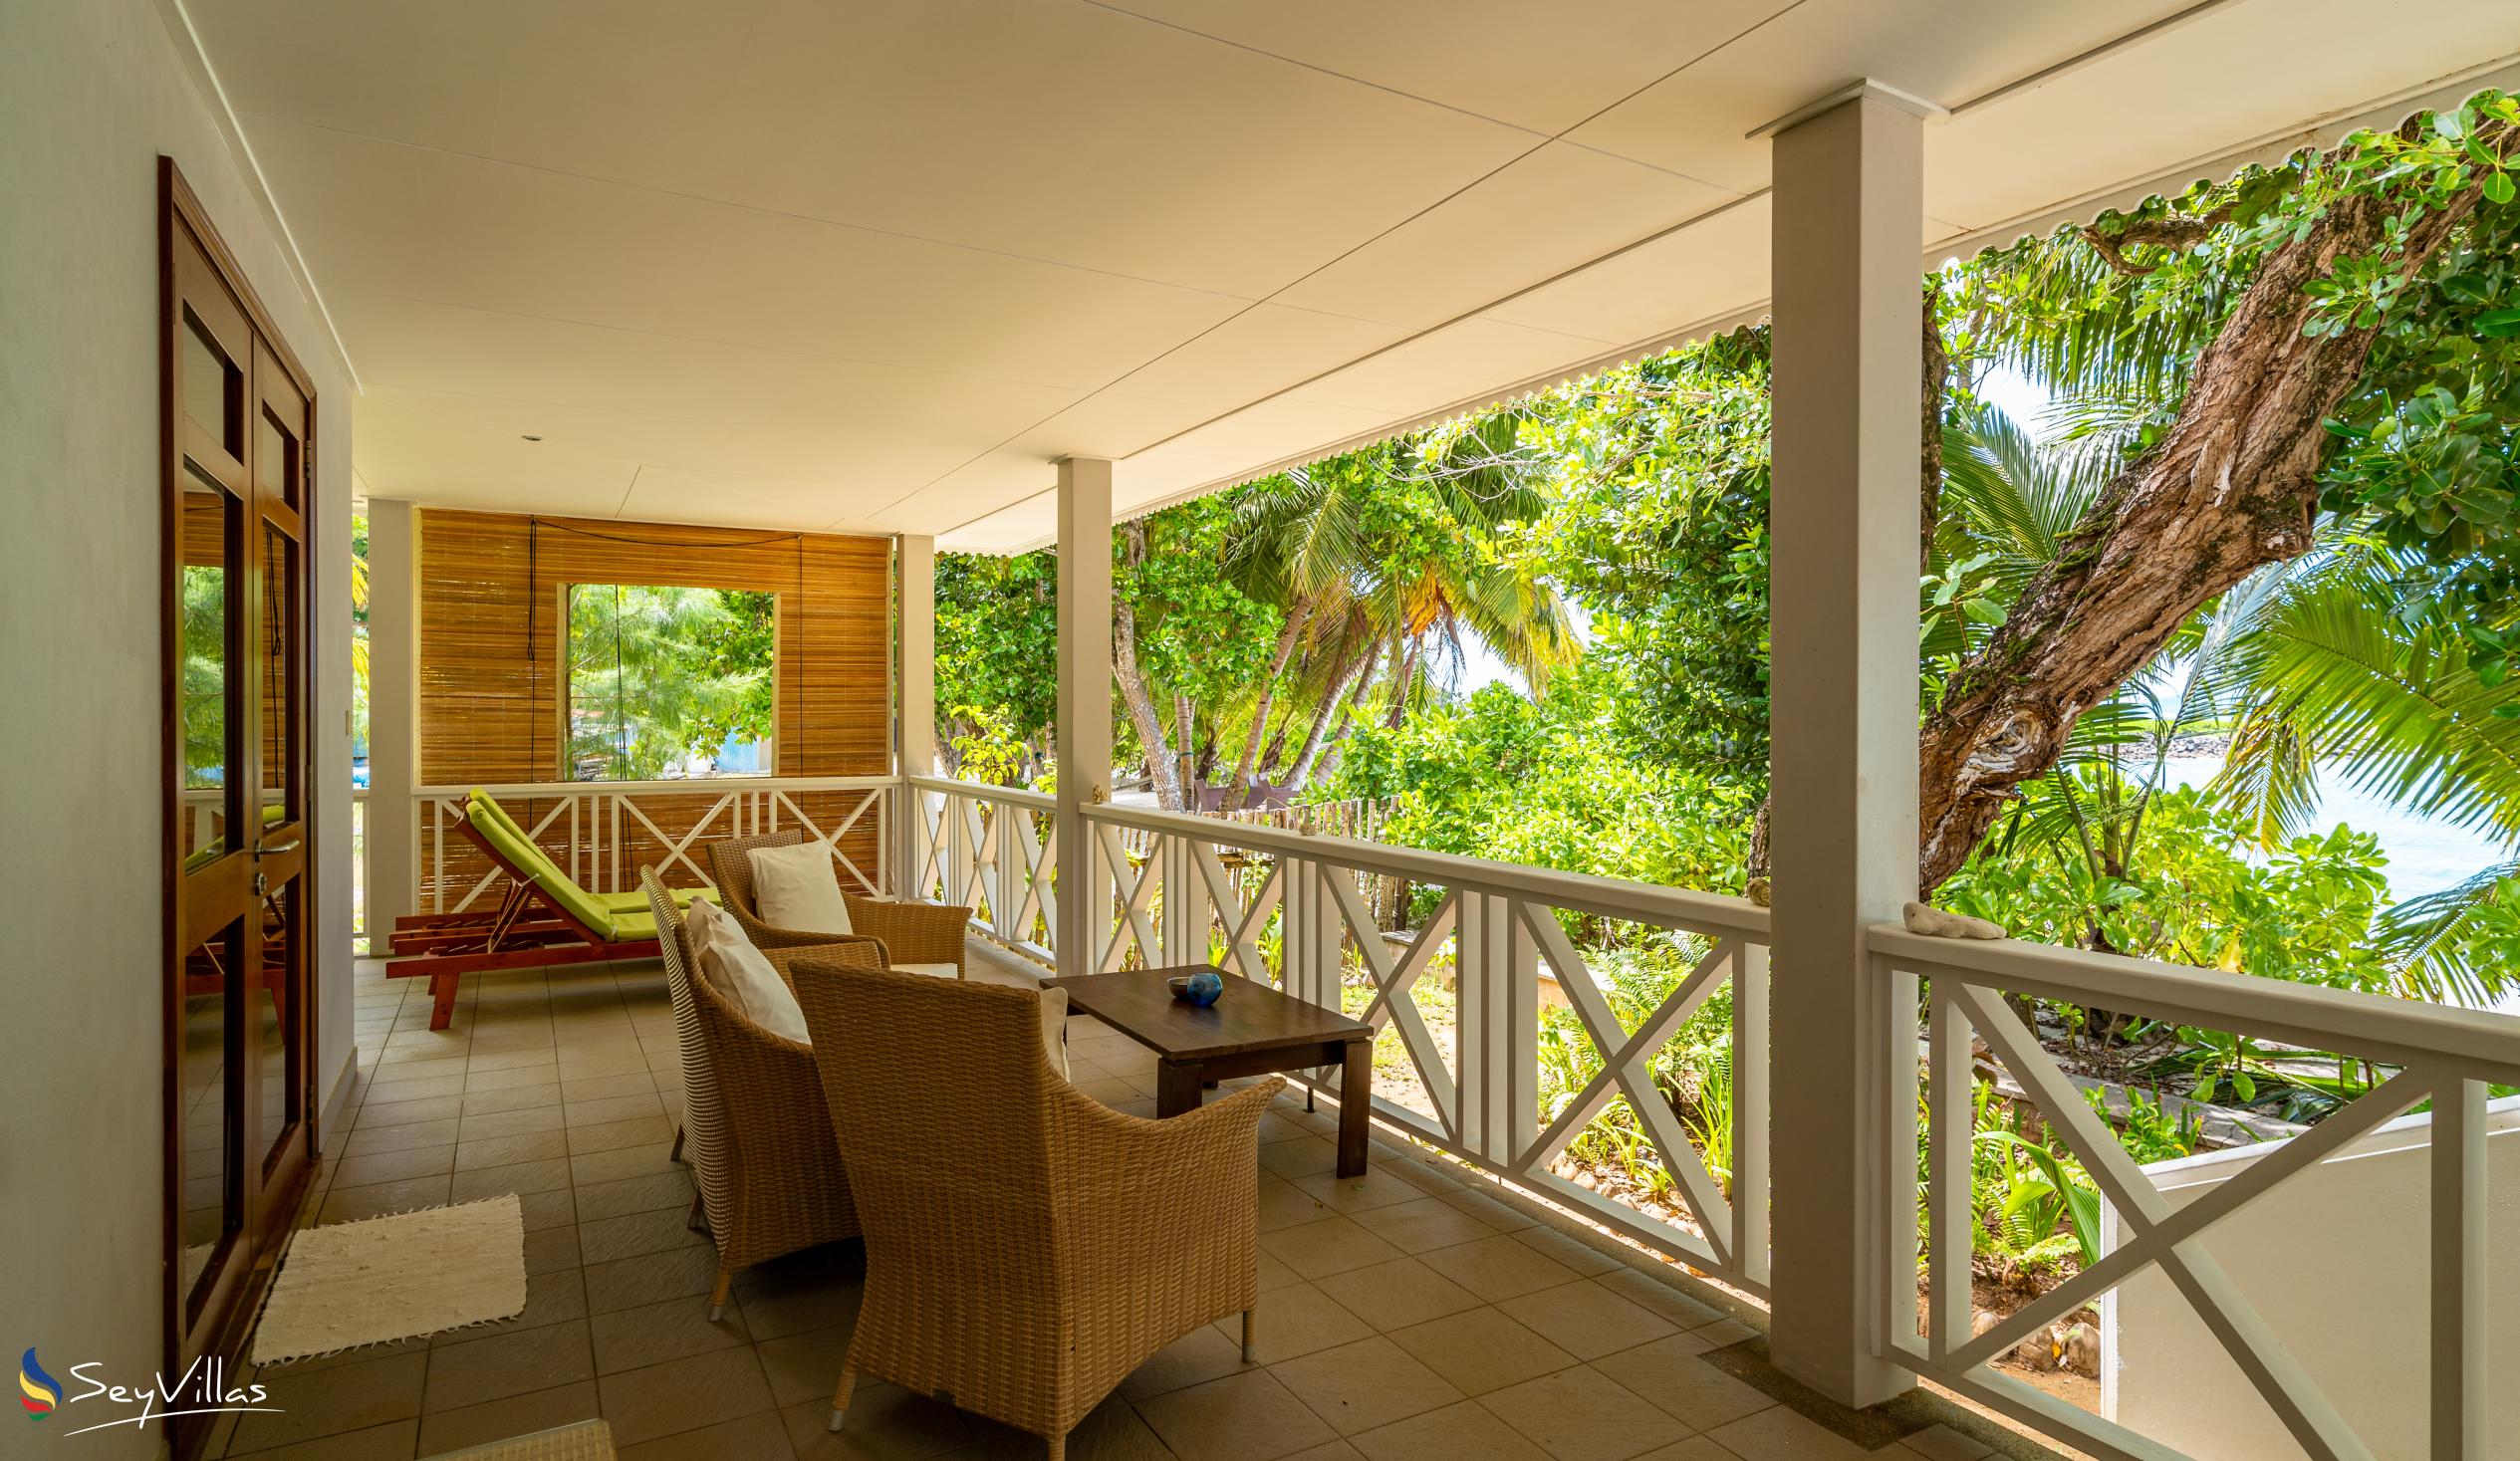 Photo 130: La Belle Tortue - Presidential Villa - Silhouette Island (Seychelles)